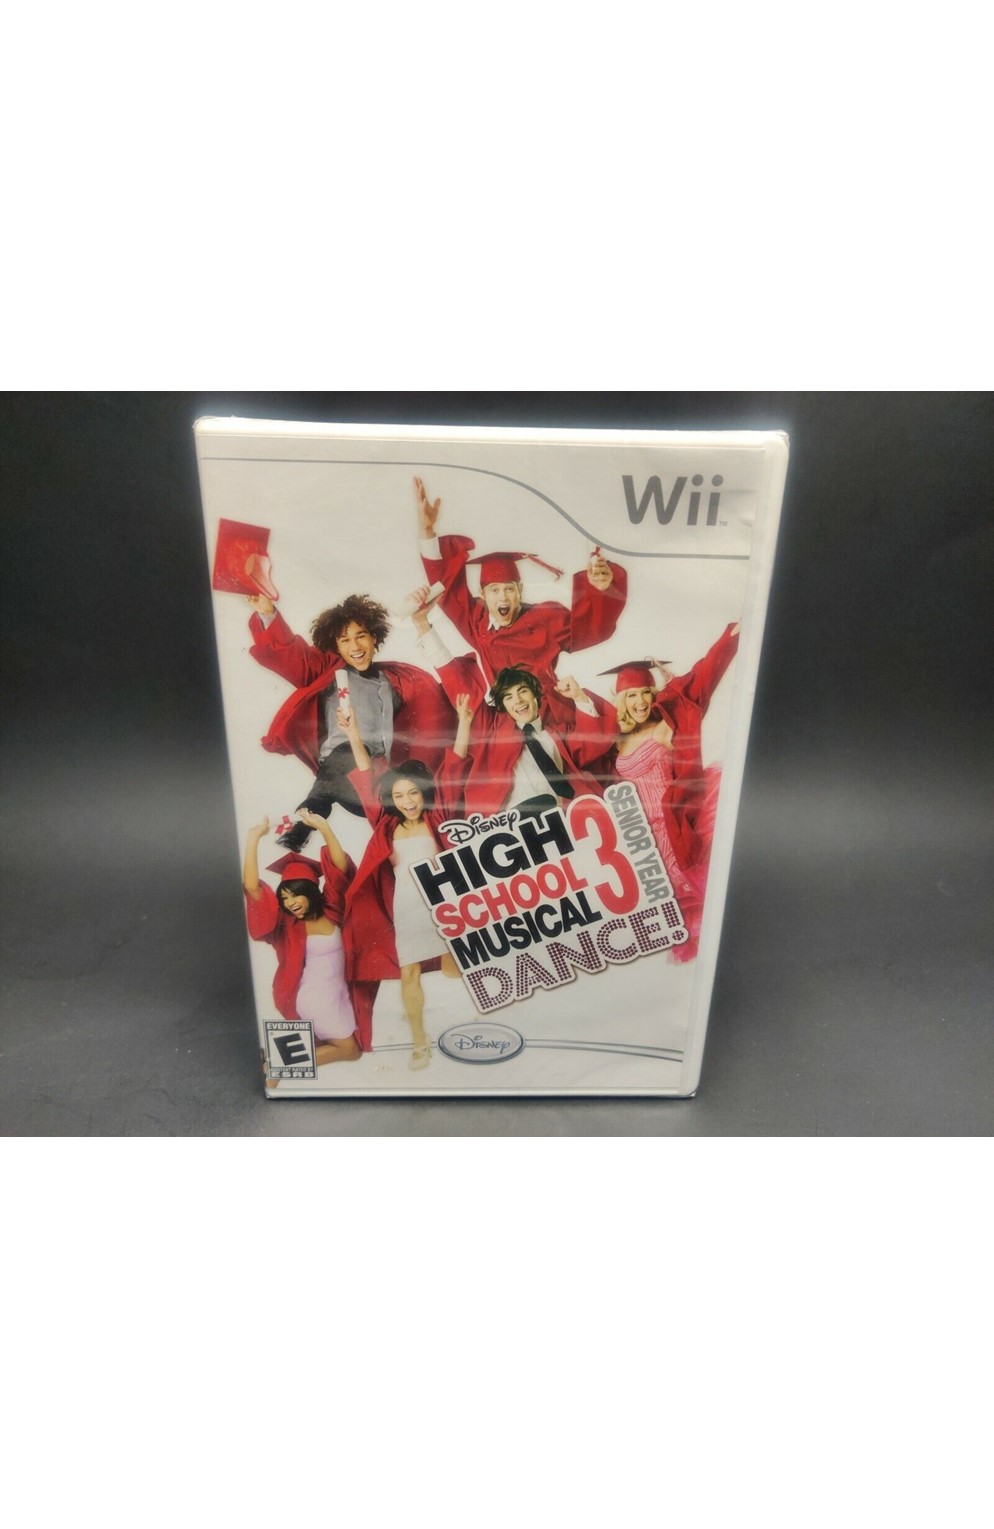 Nintendo Wii Disney Sing It High School Musical 3 